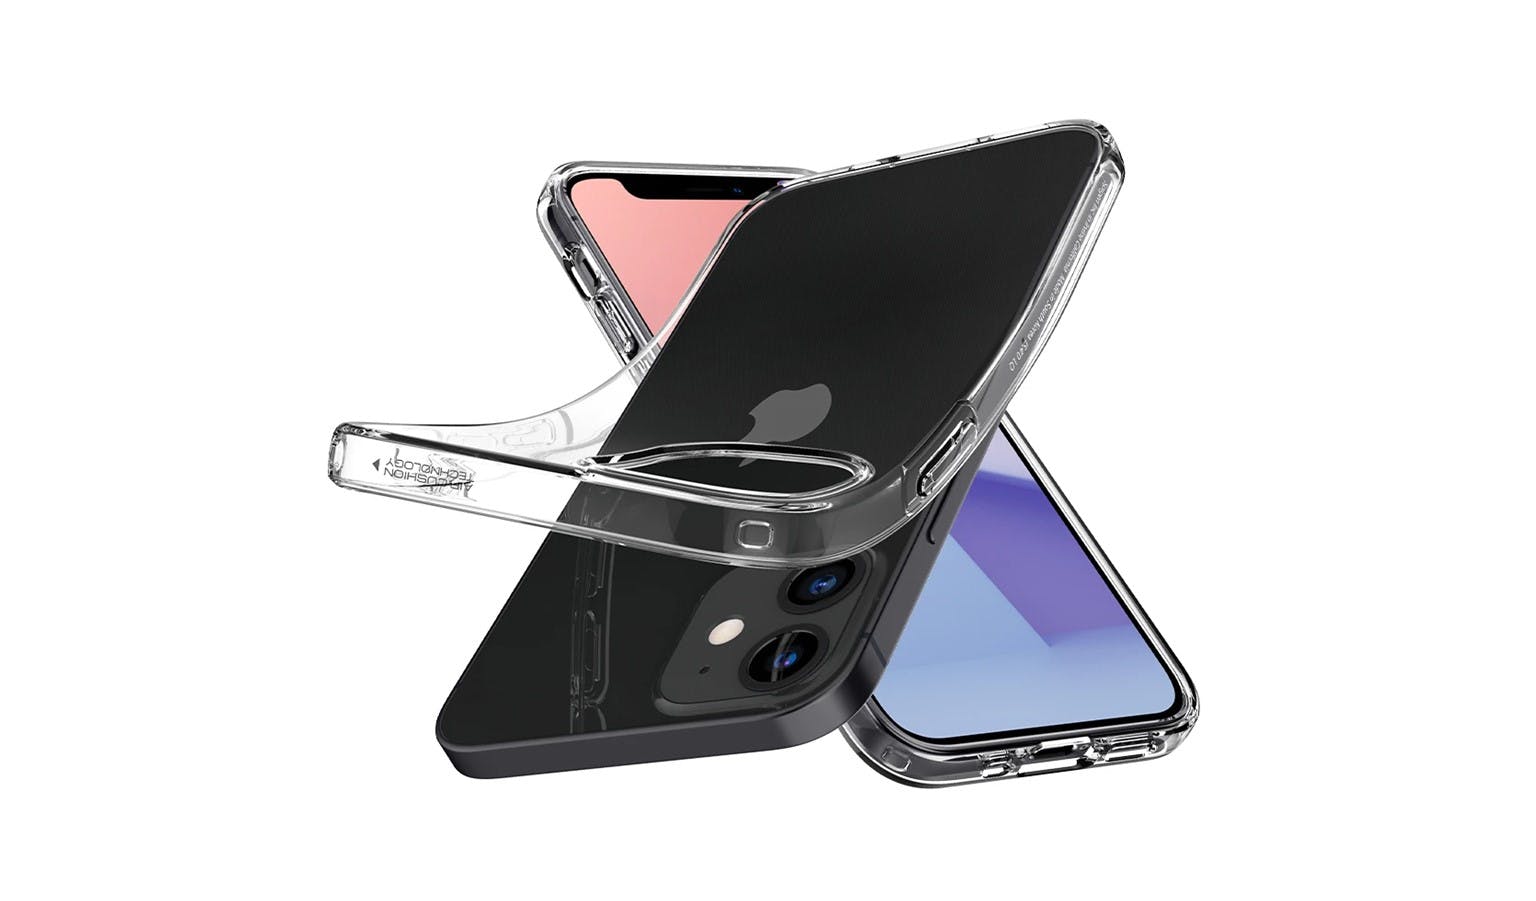 Spigen Crystal Flex for the iPhone 12 Mini 